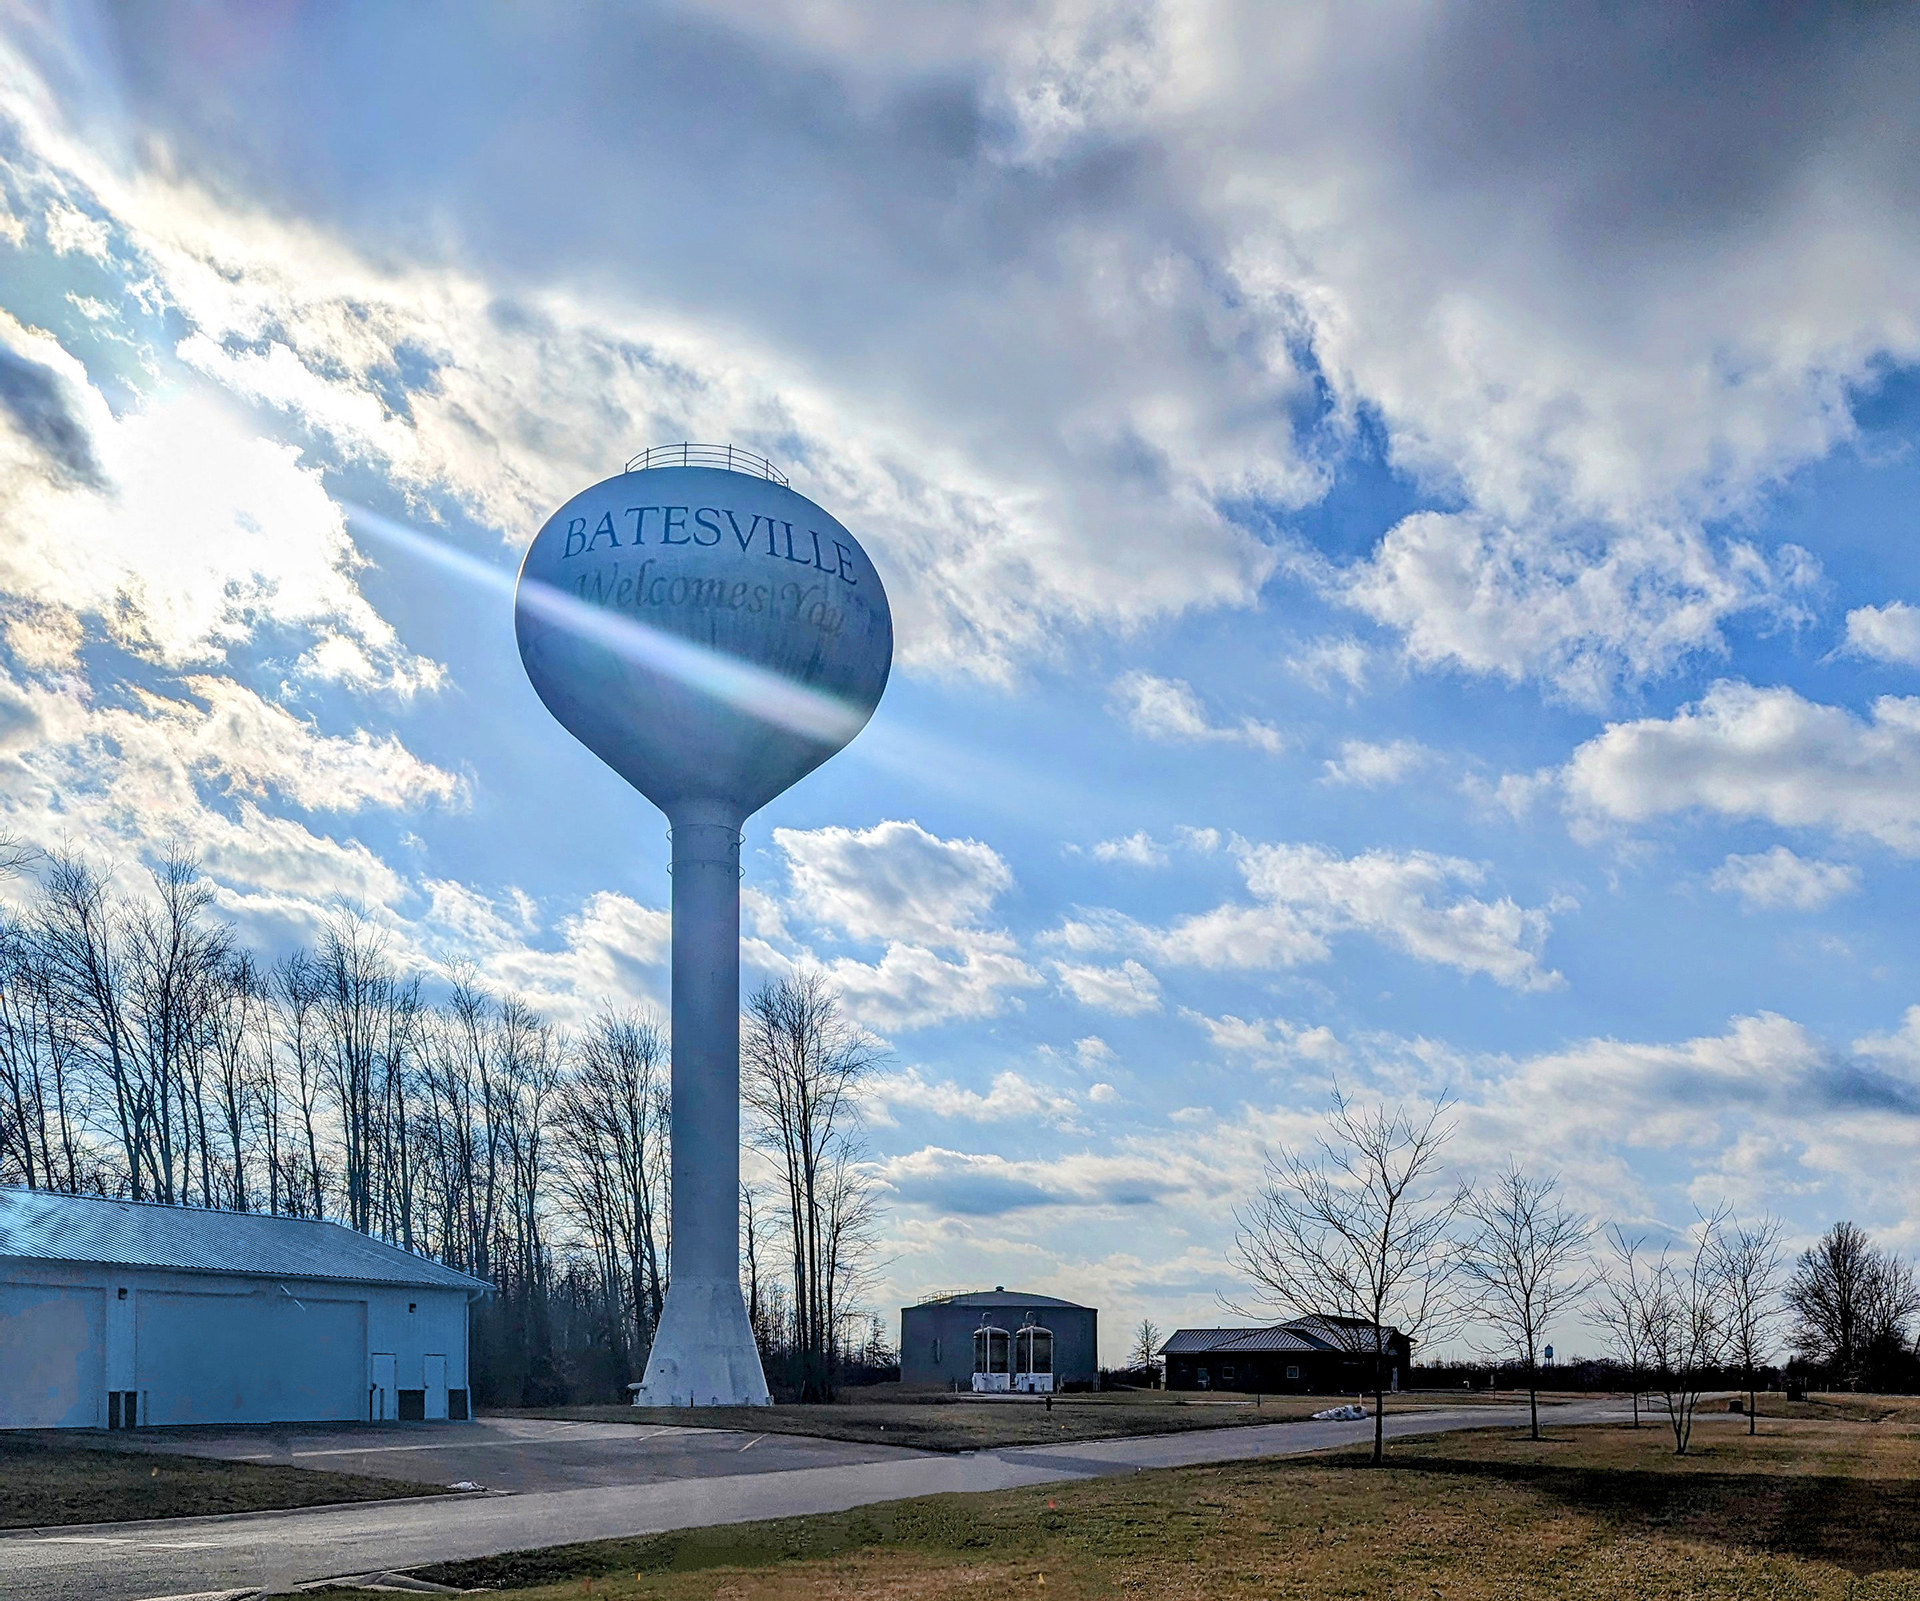 Batesville water tower